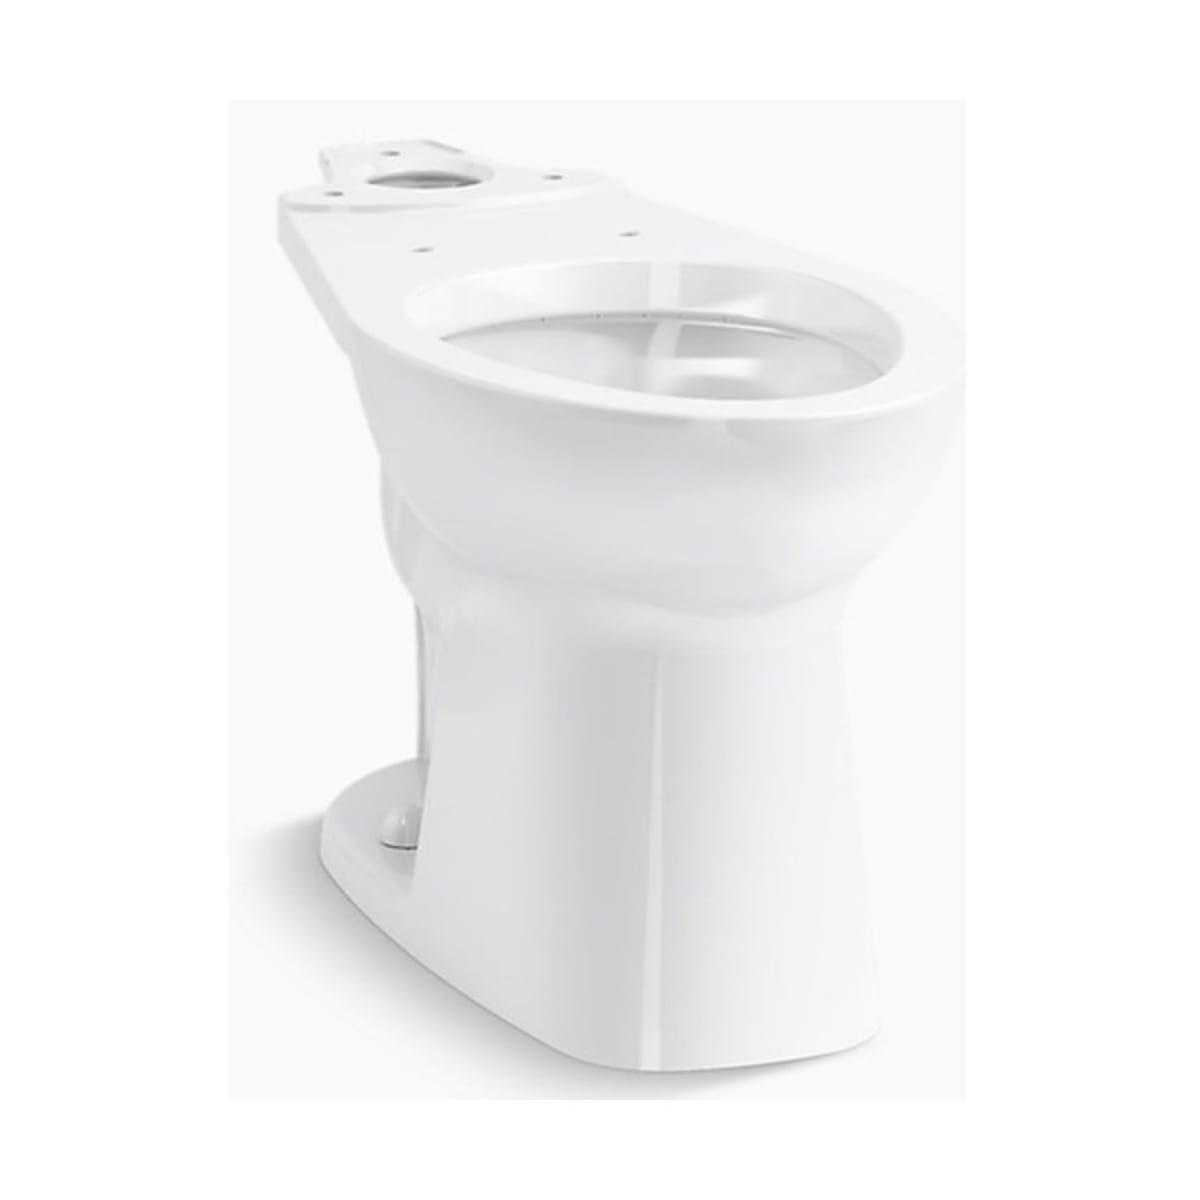 Sterling 403379-0 Valton Floor Mounted Elongated Toilet | Build.com